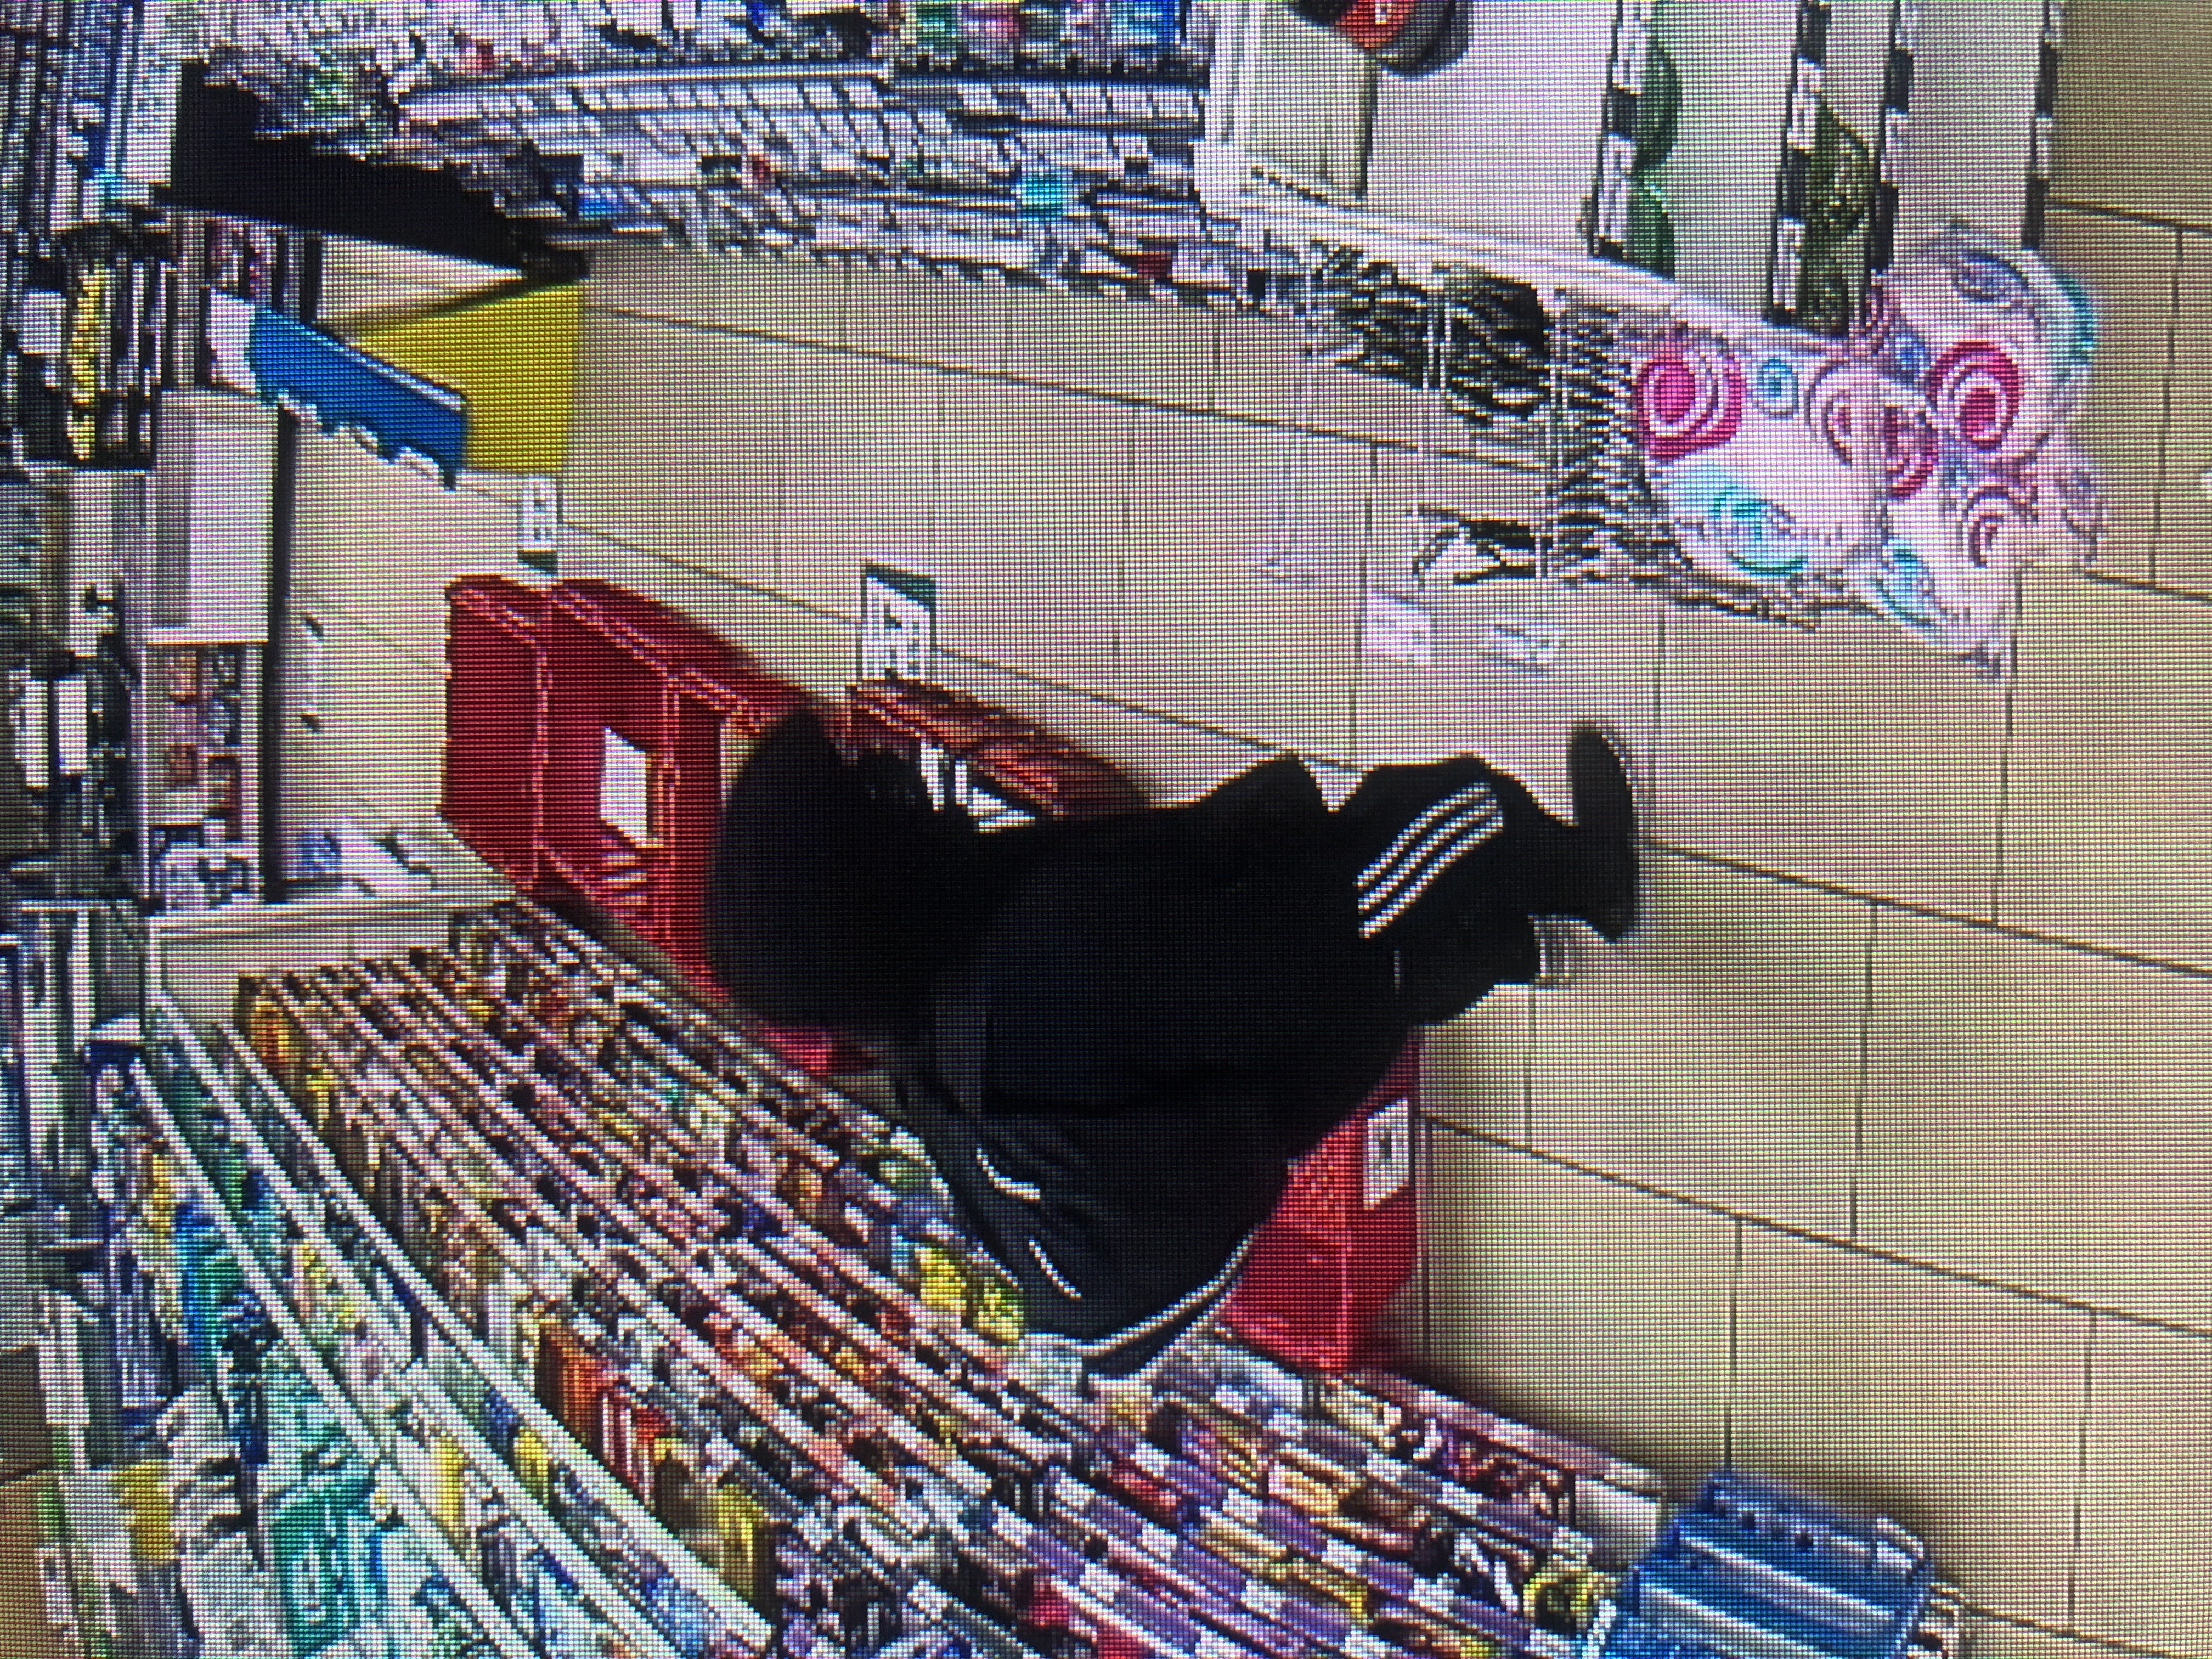 Image 2: Robbery Suspect